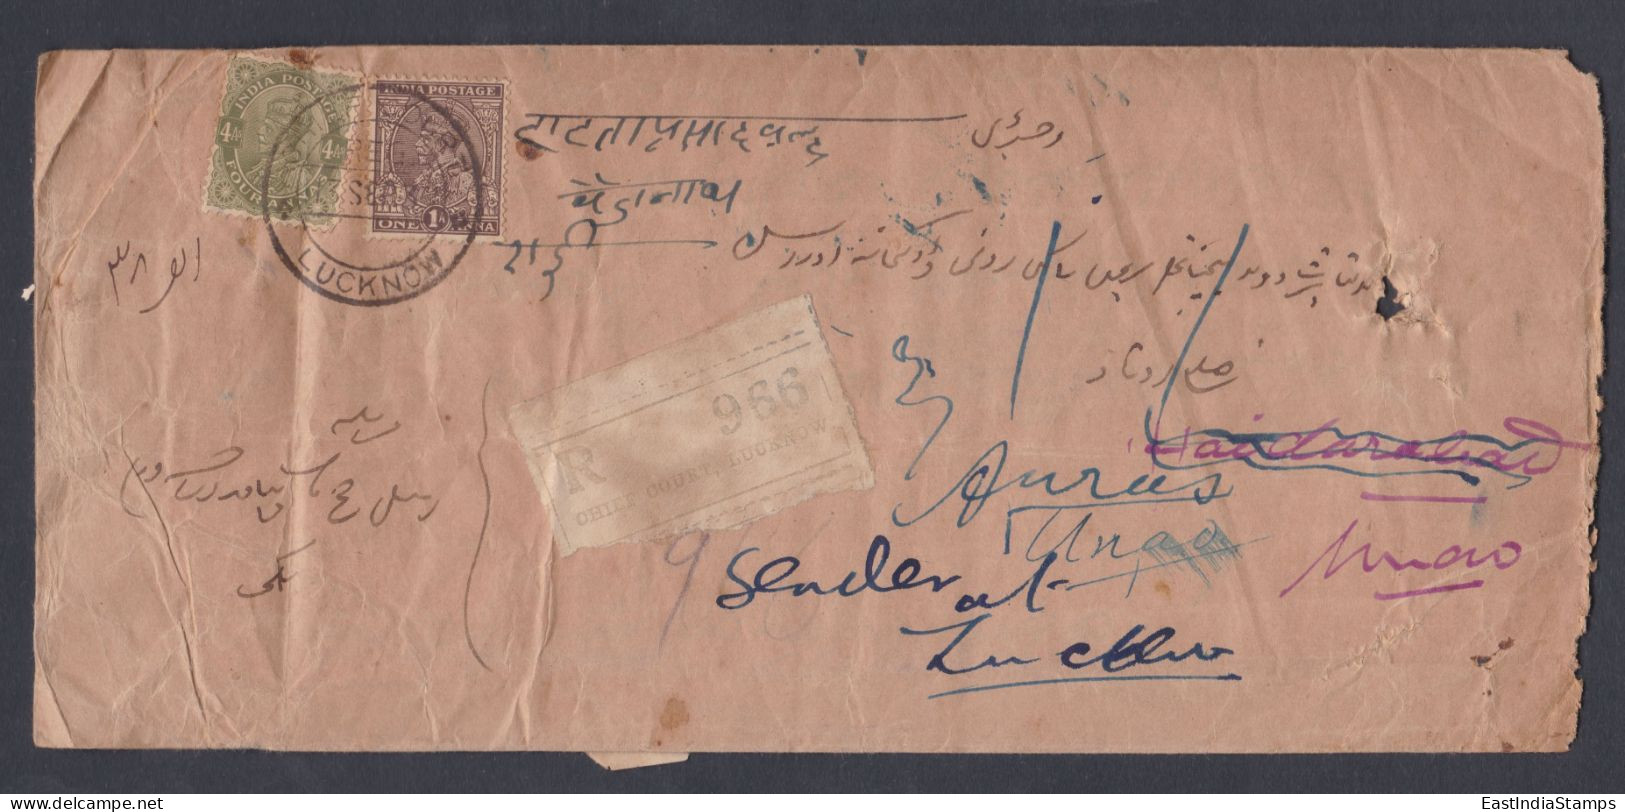 Inde British India 1937 Used Registered Cover, Civil Judge, Lucknow To Unao, Return Mail, King George V Stamps - 1911-35 Koning George V